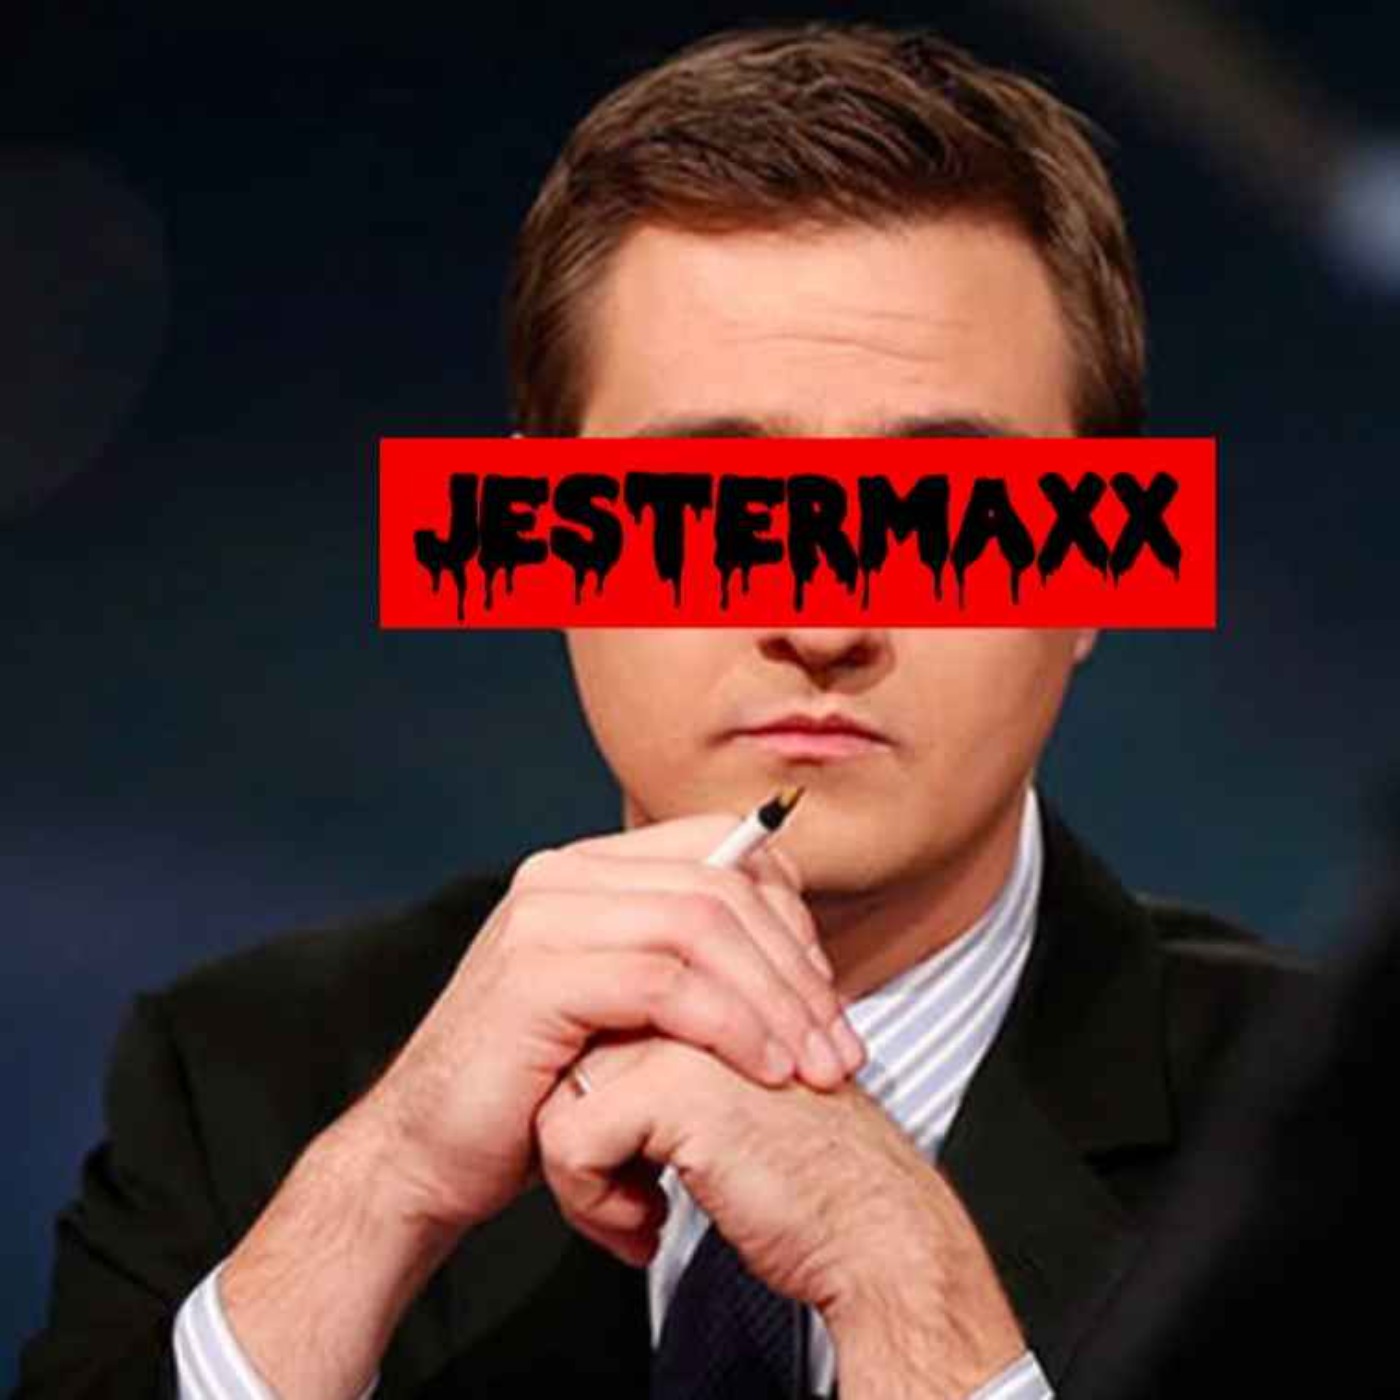 Episode 174: Jestermaxx